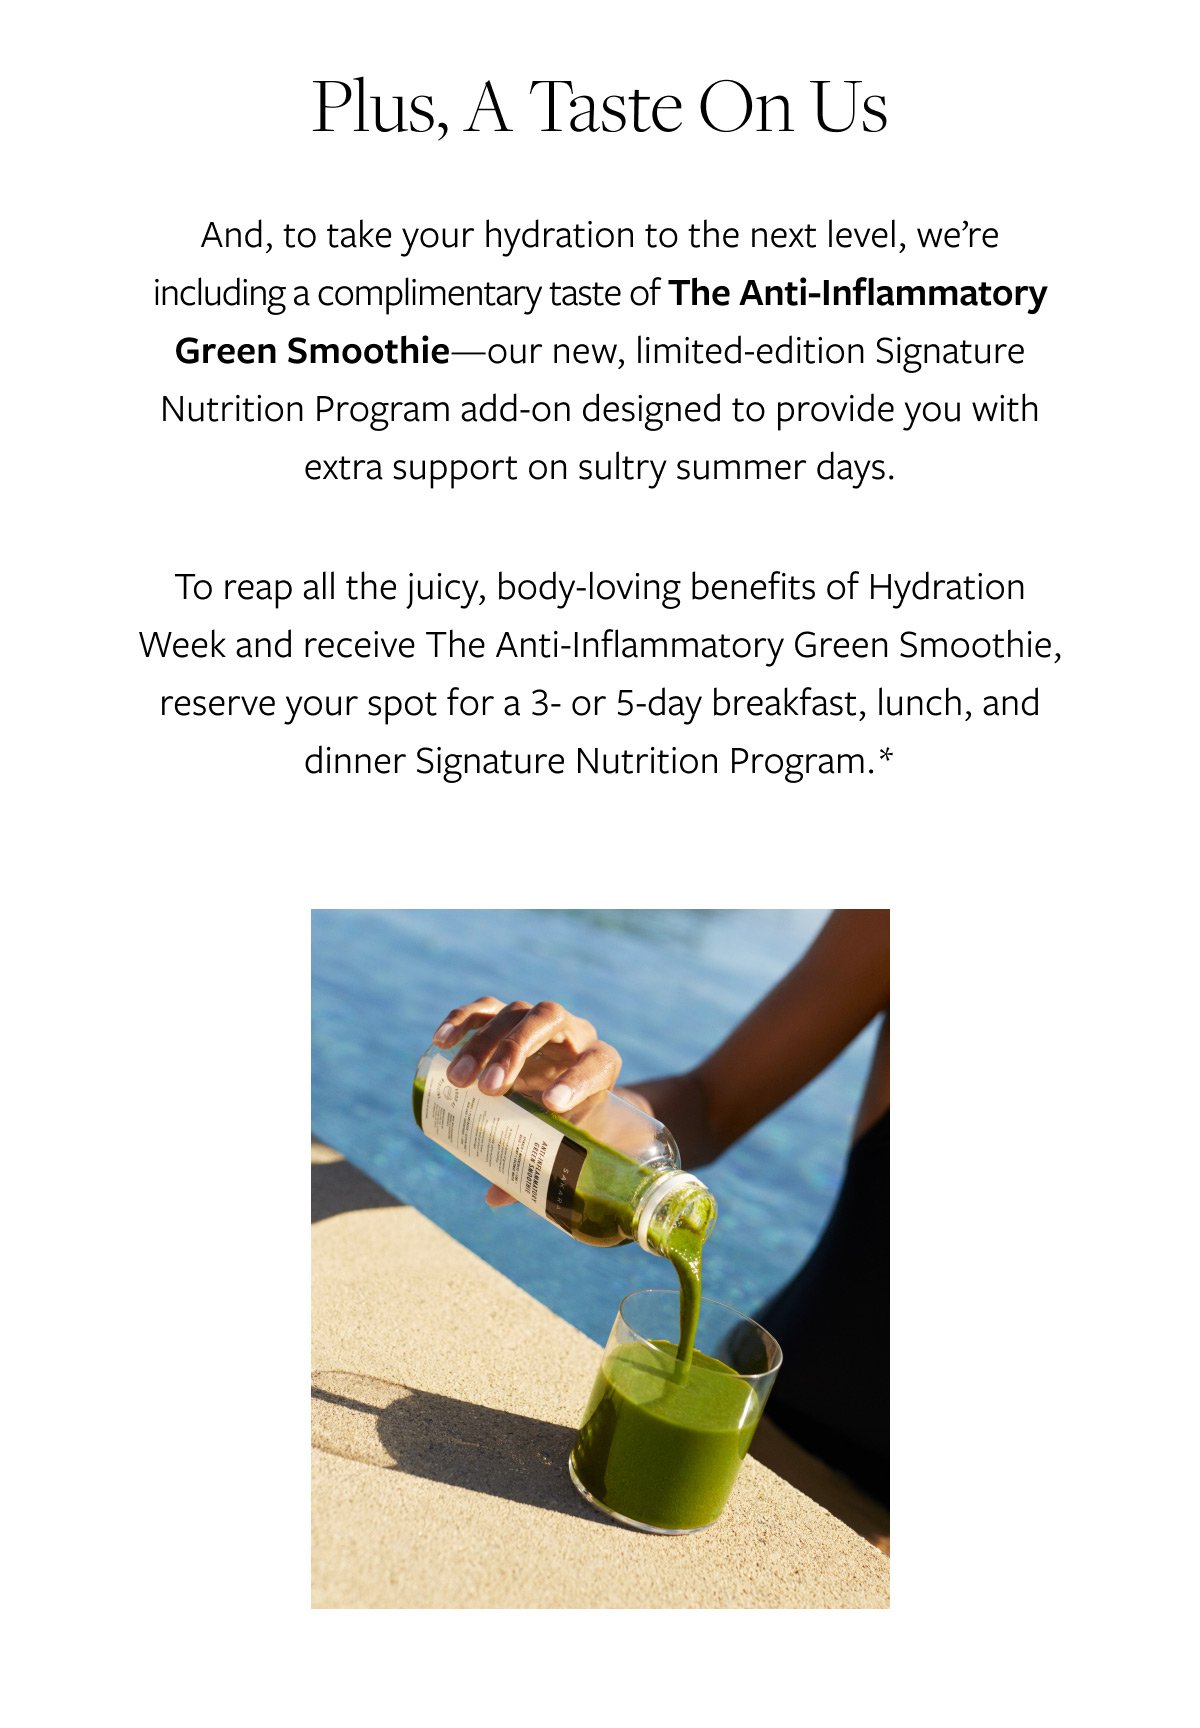 Plus, A Taste On Us—The Anti-Inflammatory Green Smoothie